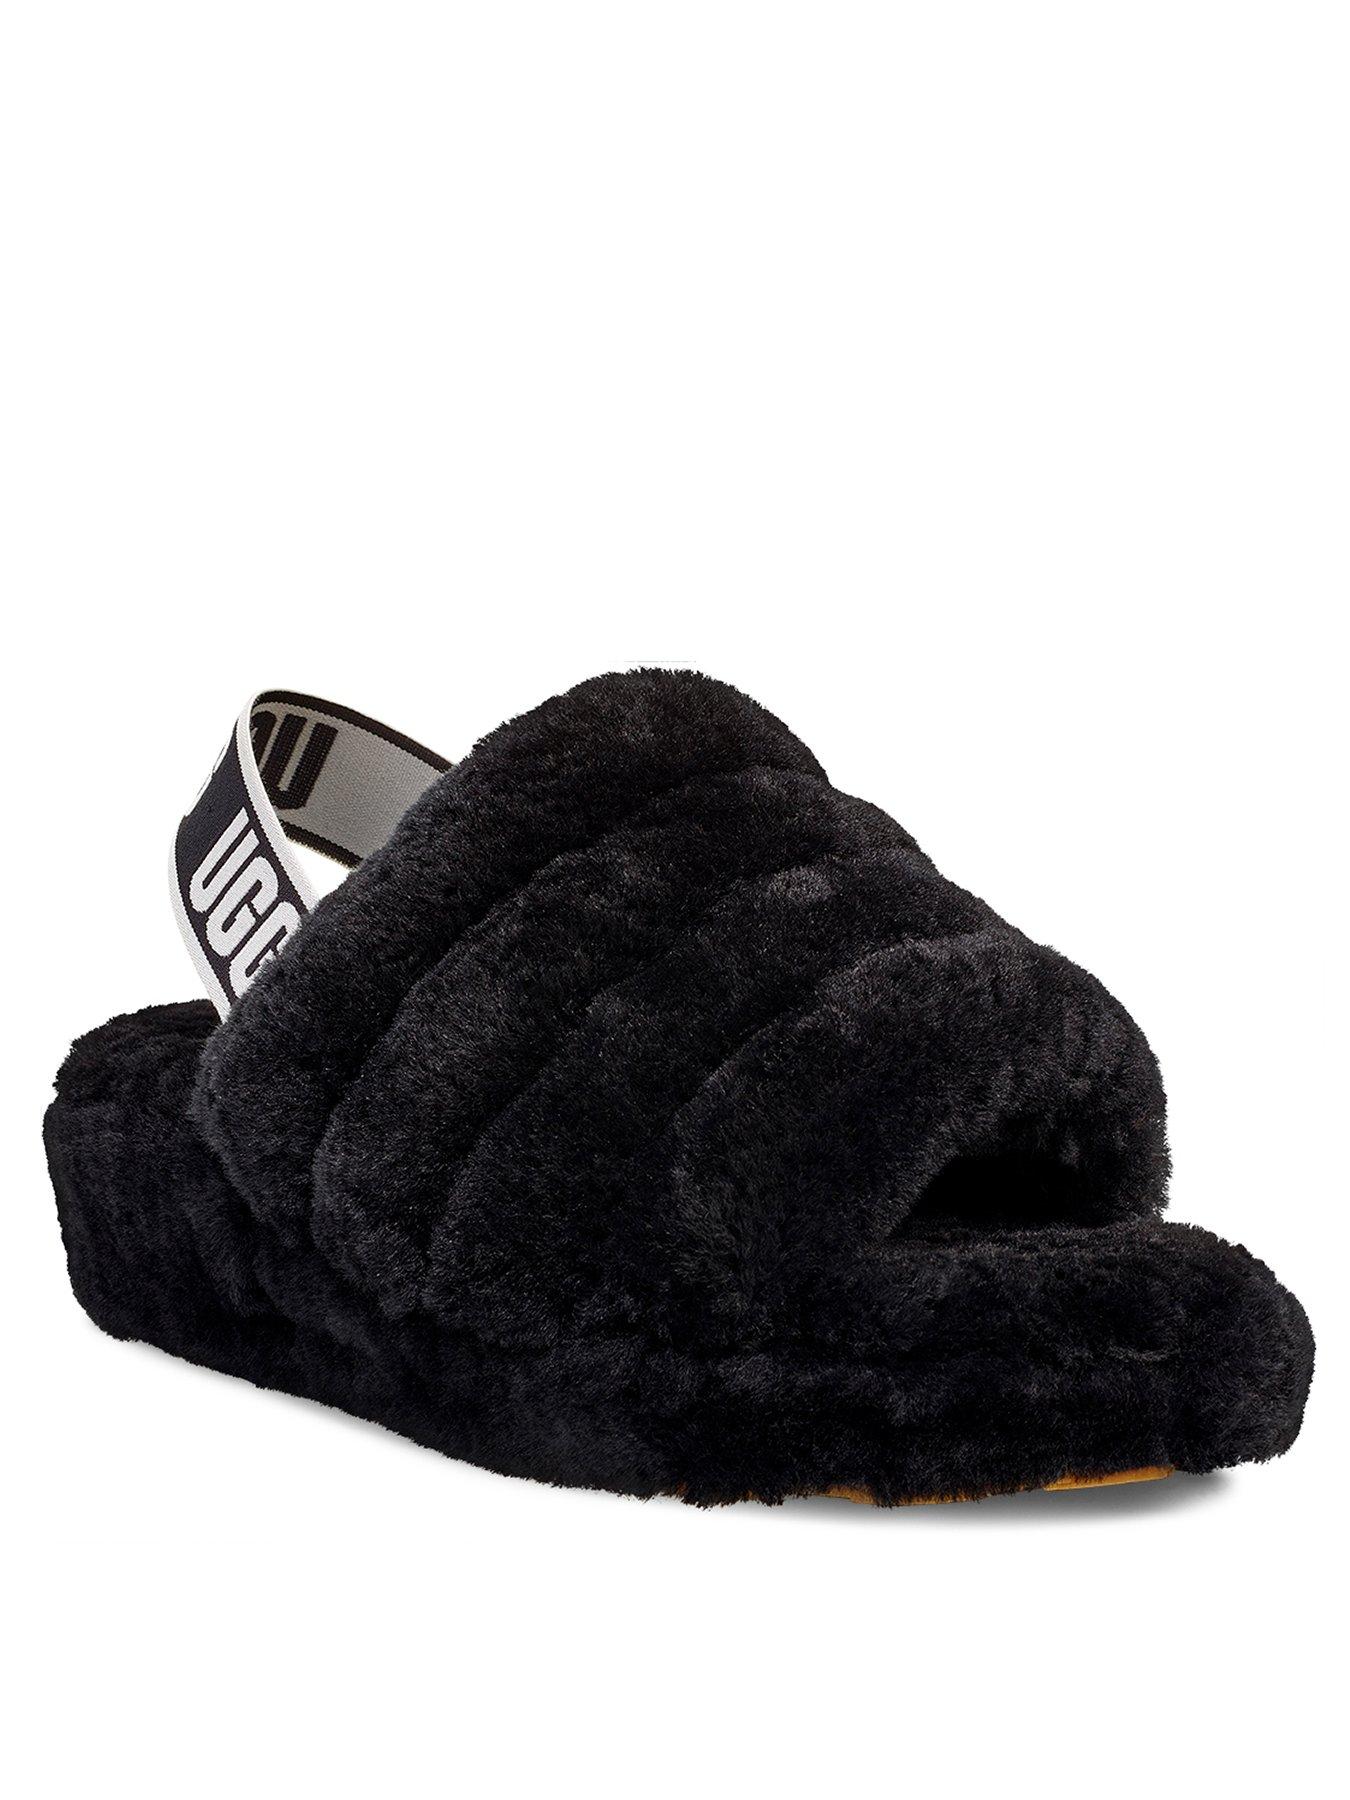 ugg yeah slippers black